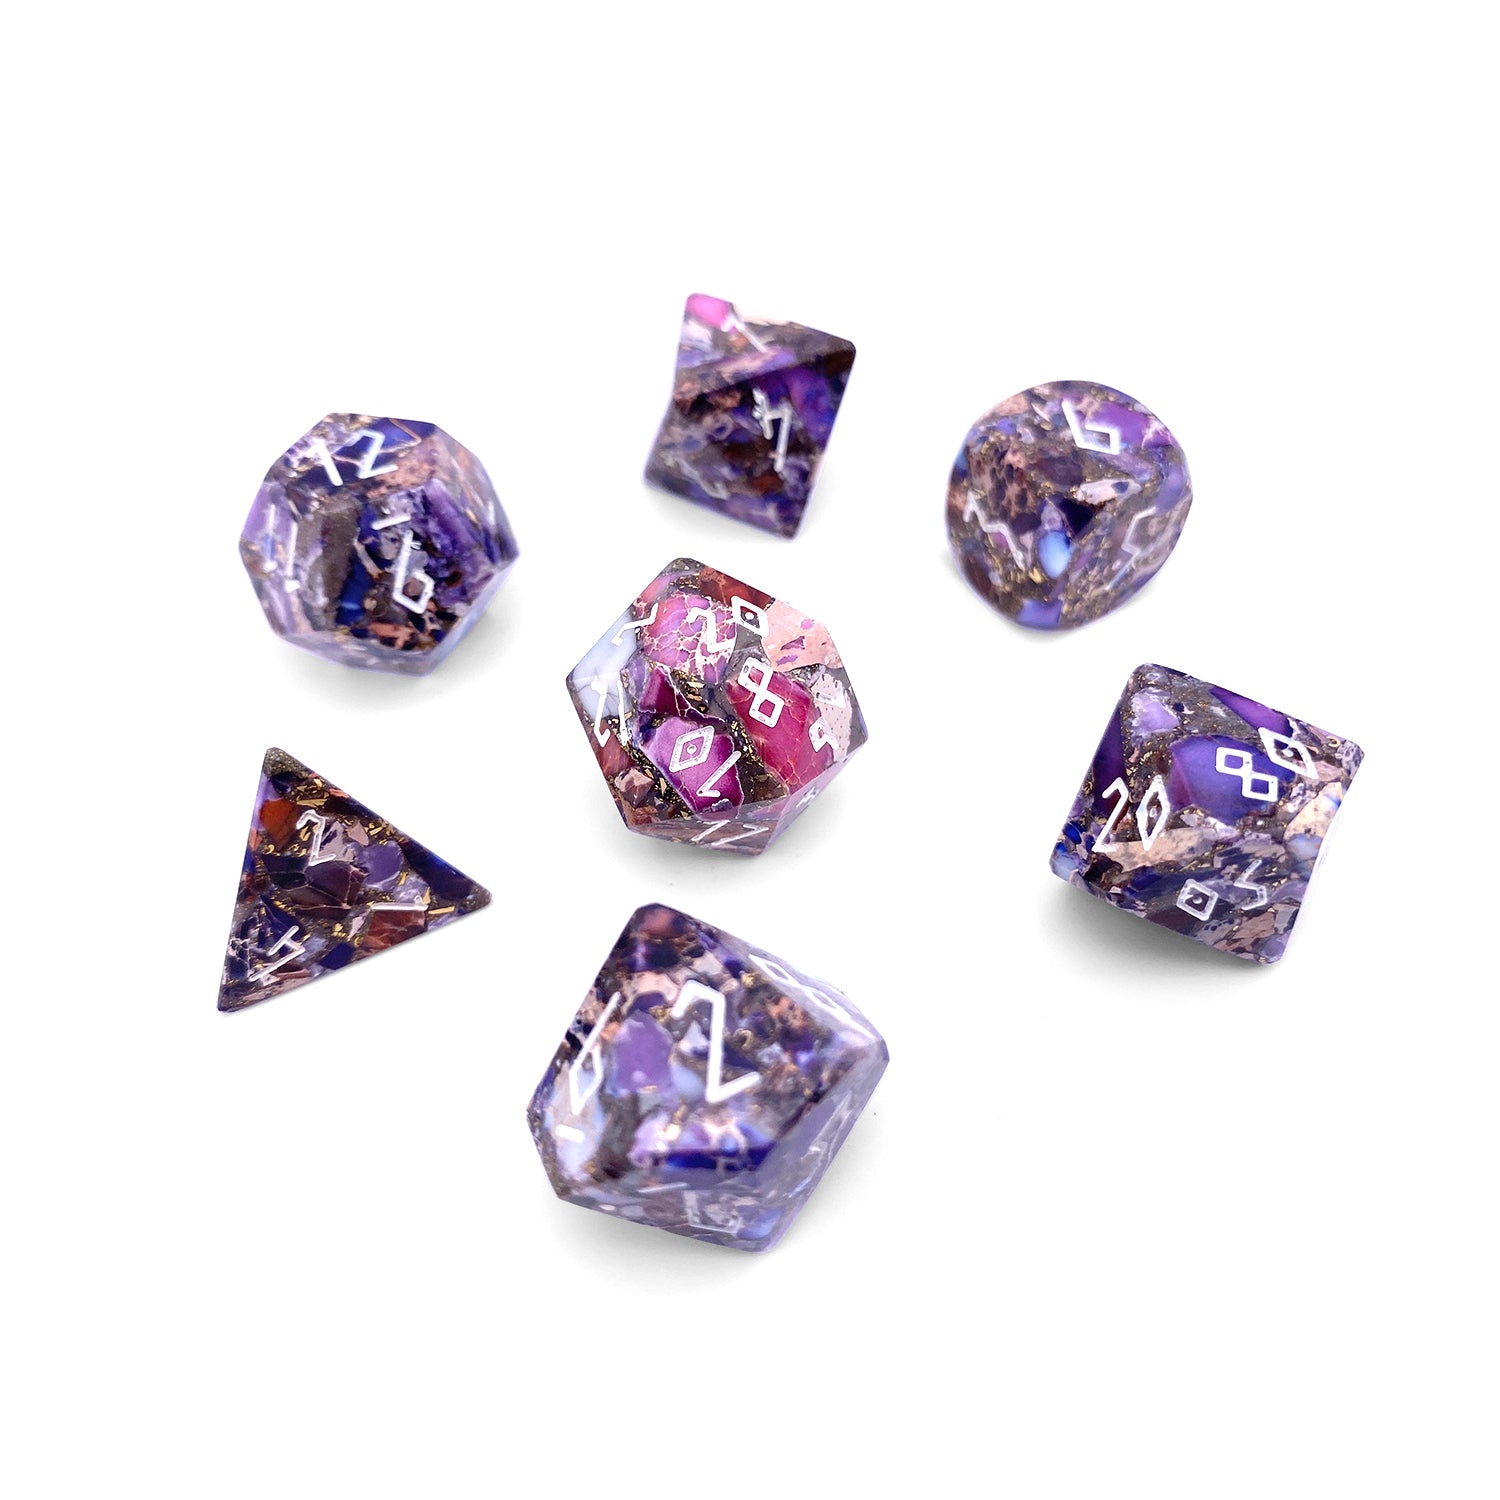 Bronzite Purple Imperial Jasper - 7 Piece RPG Set TruStone Dice